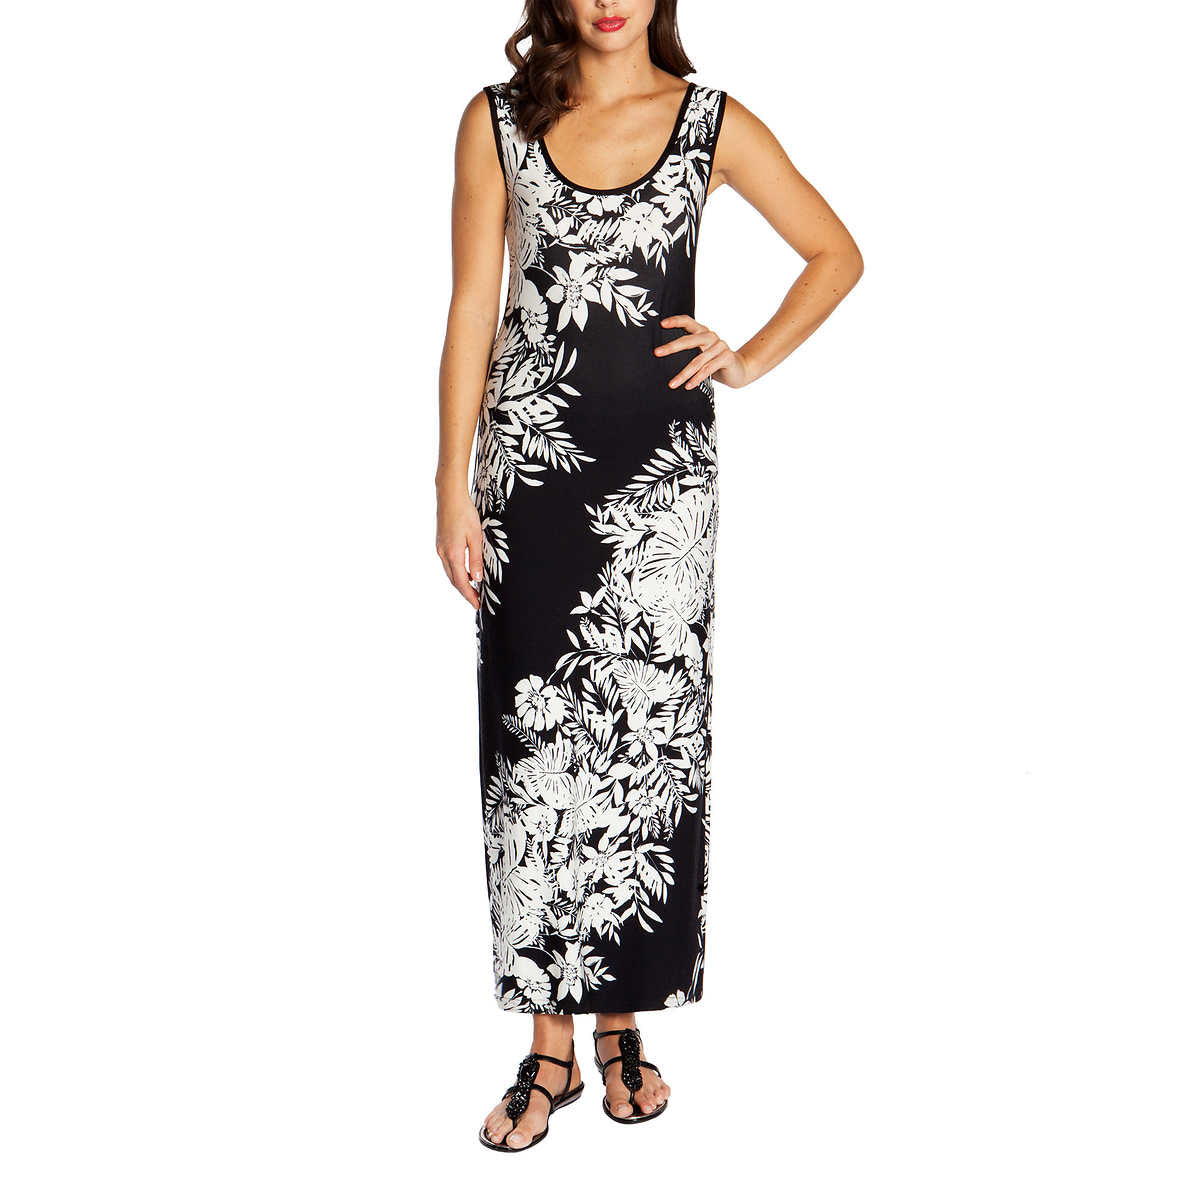 Mario Serrani Ladies' Maxi Dress, Black & White Floral - ADDROS.COM